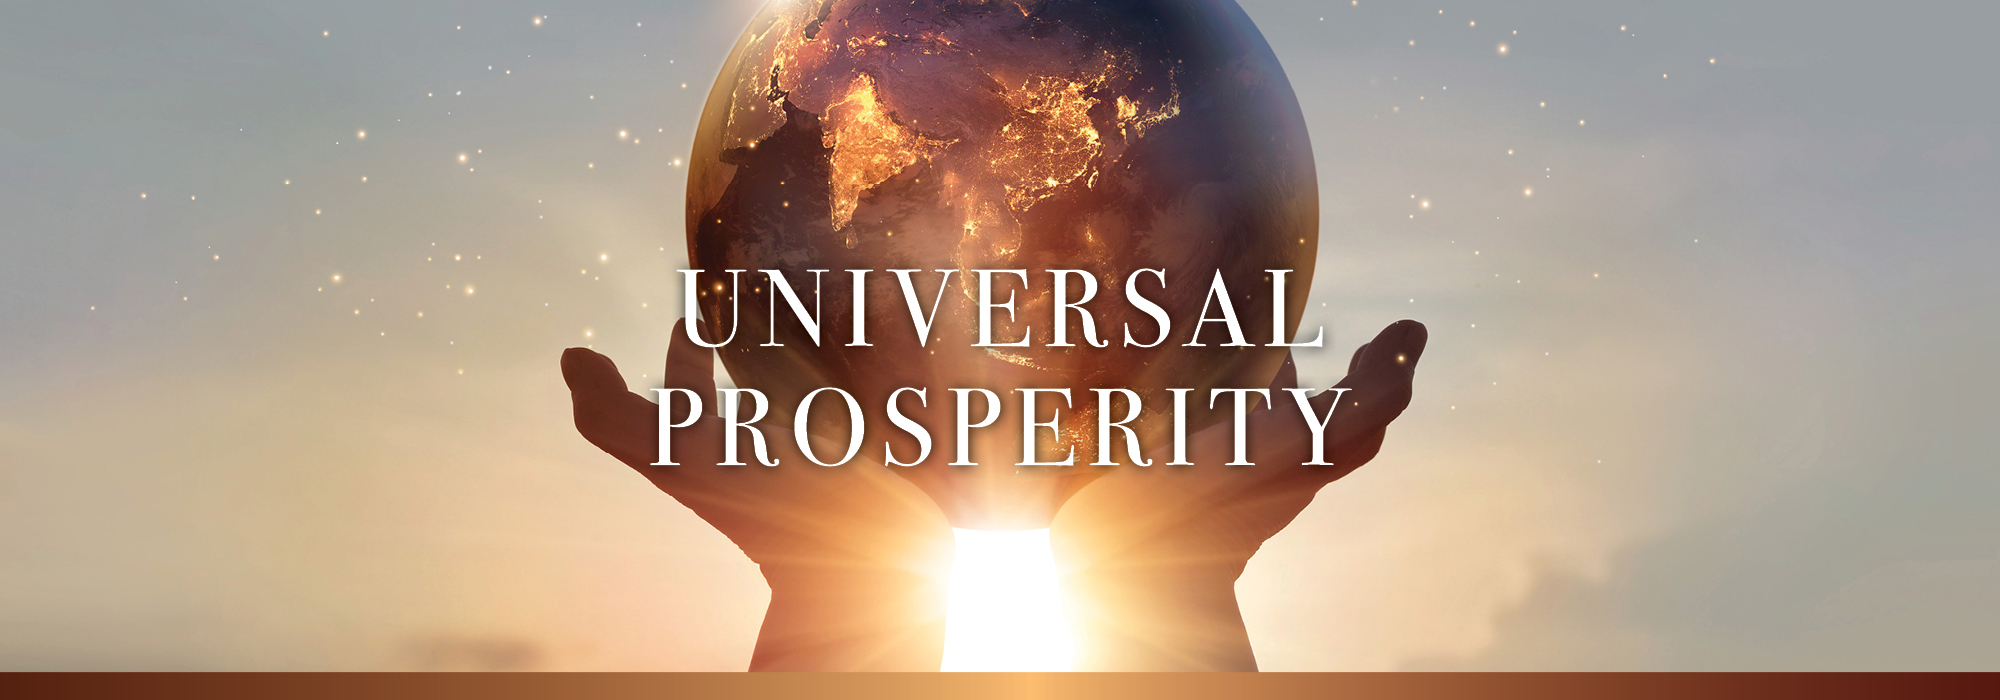 Universal Prosperity